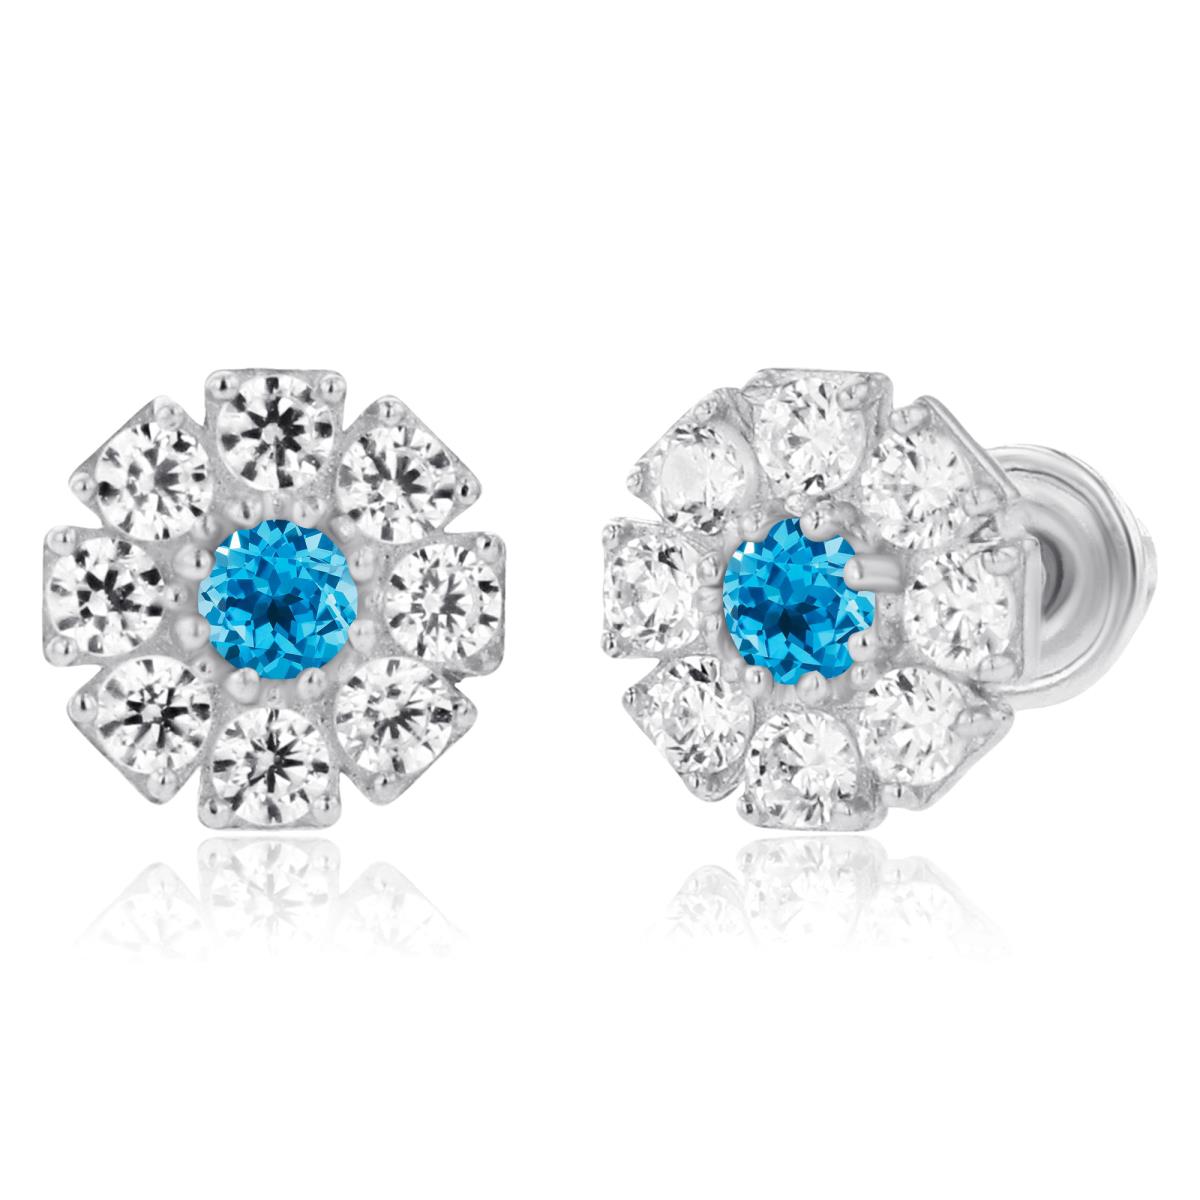 14K White Gold 2mm Round Swiss Blue Topaz & 1.5mm Created White Sapphire Flower Screwback Earrings